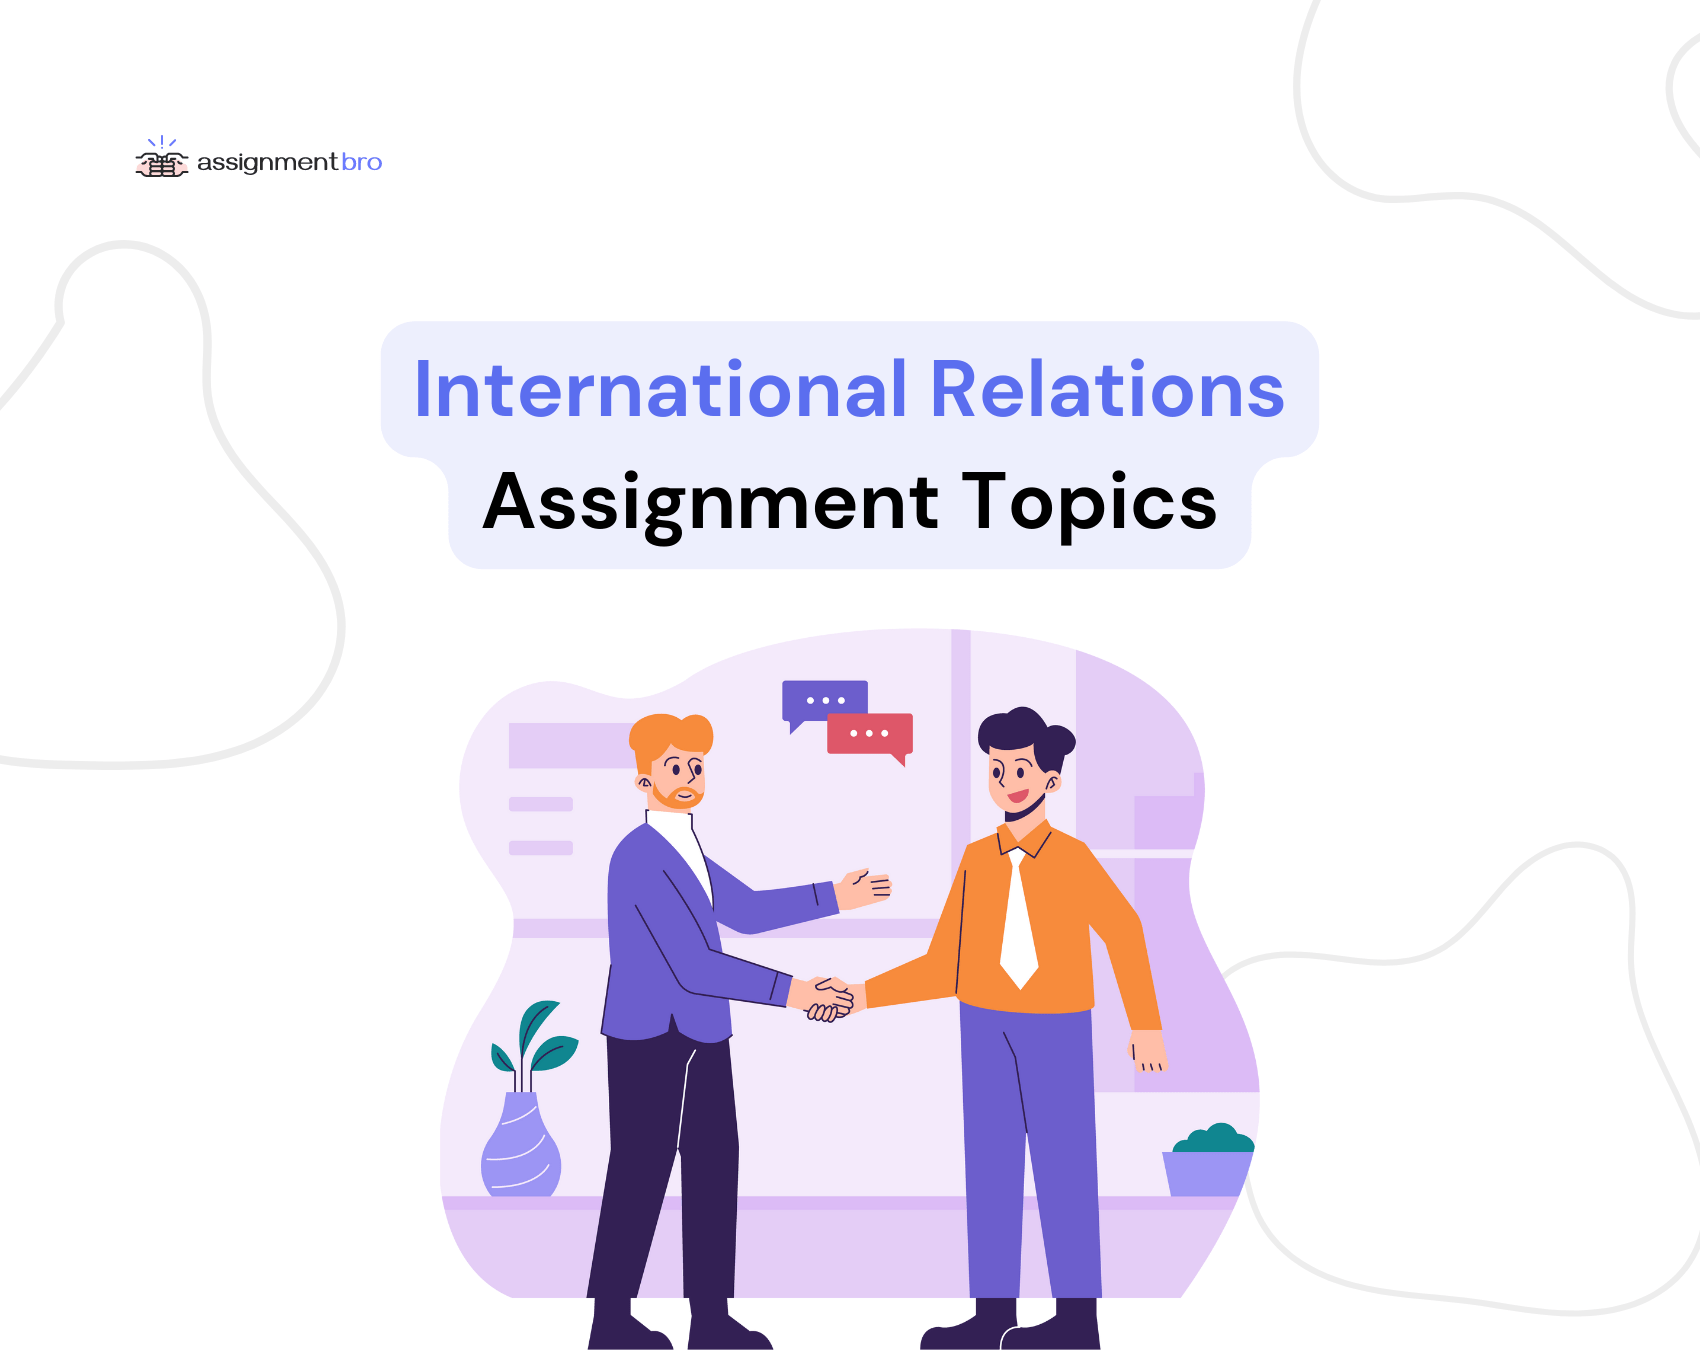 International Relations Assignment Topics